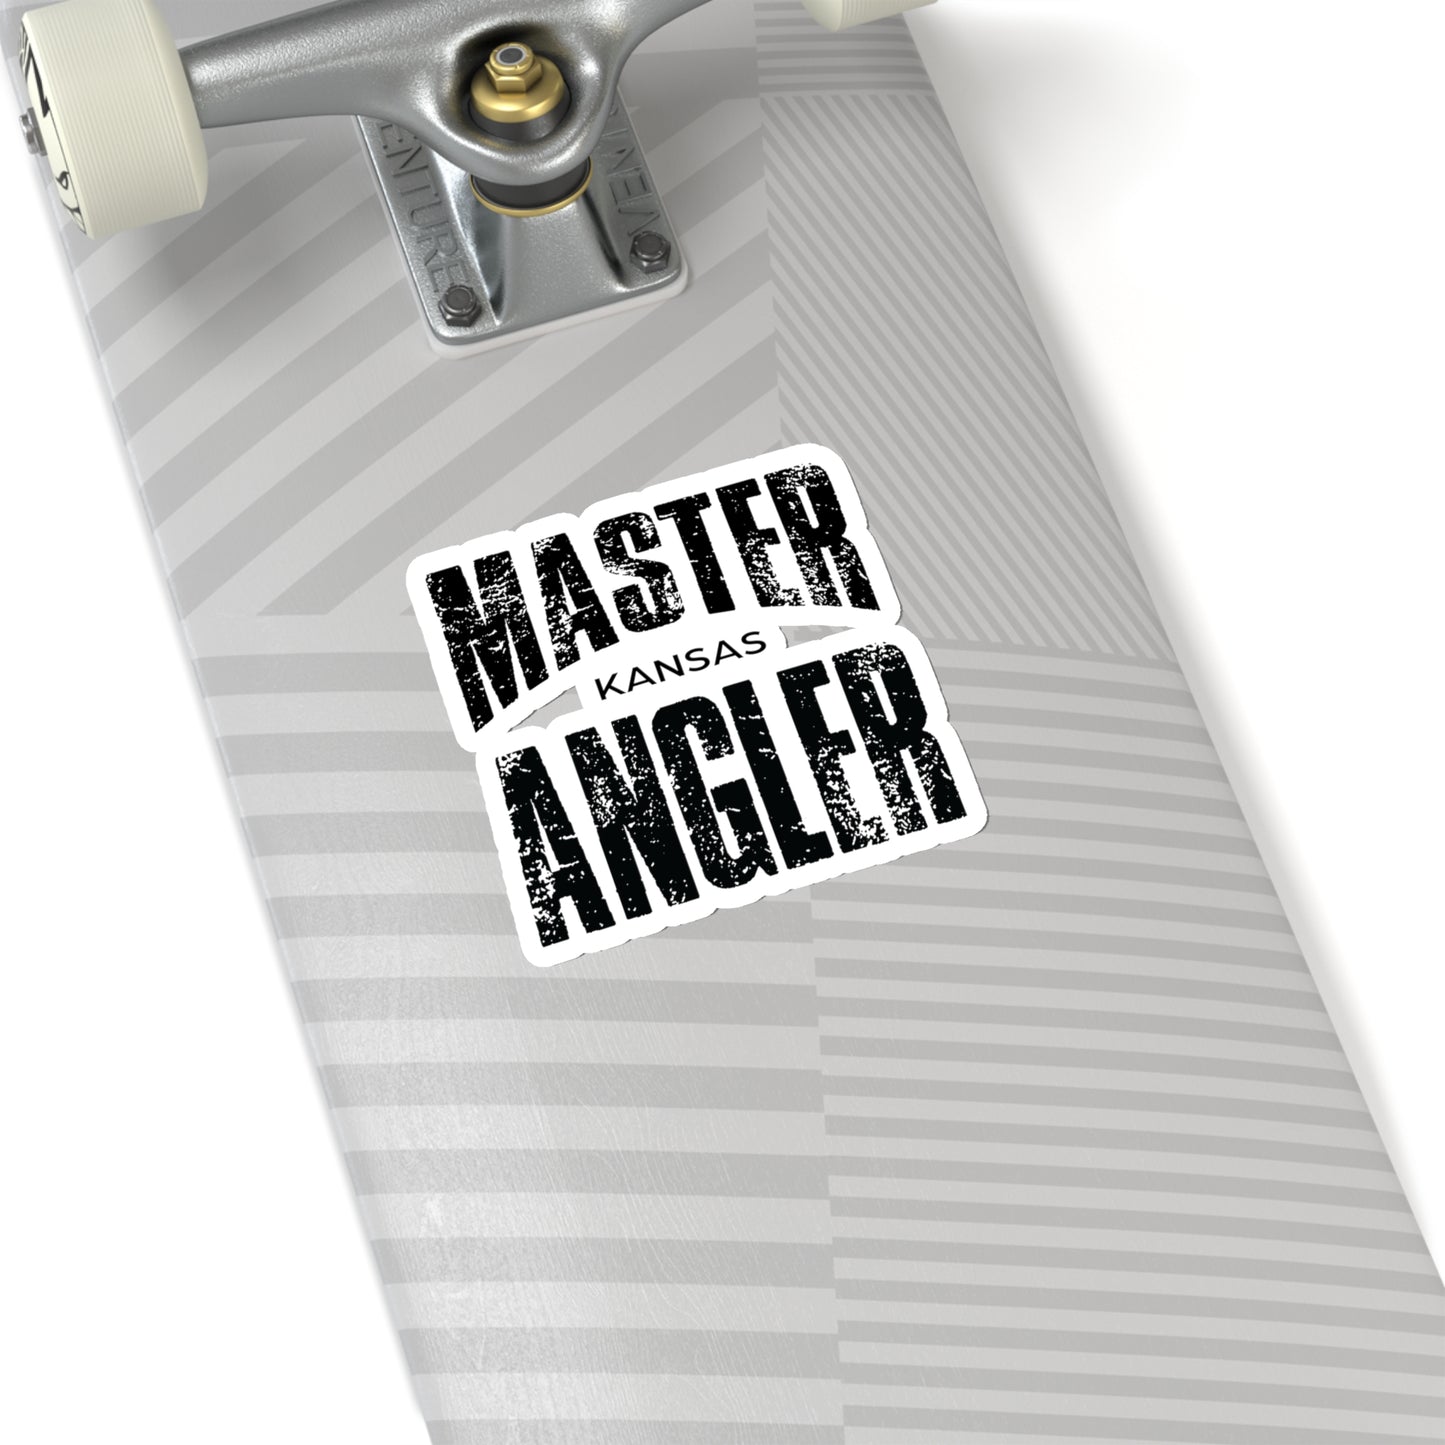 Kansas Master Angler Sticker - BLACK